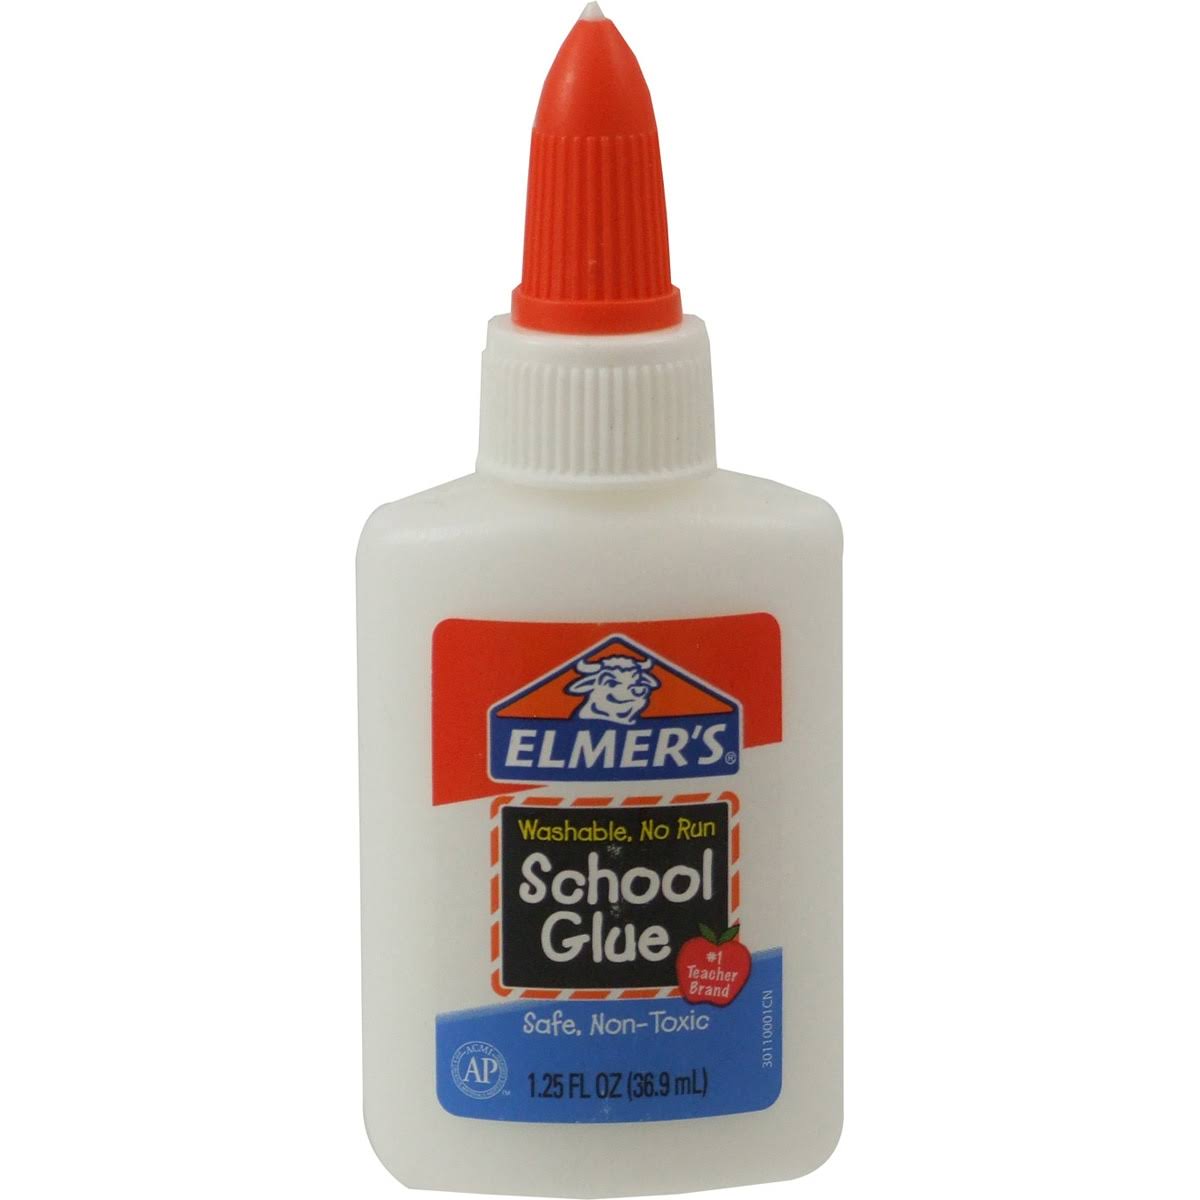 Elmer's School Glue - 36.9ml